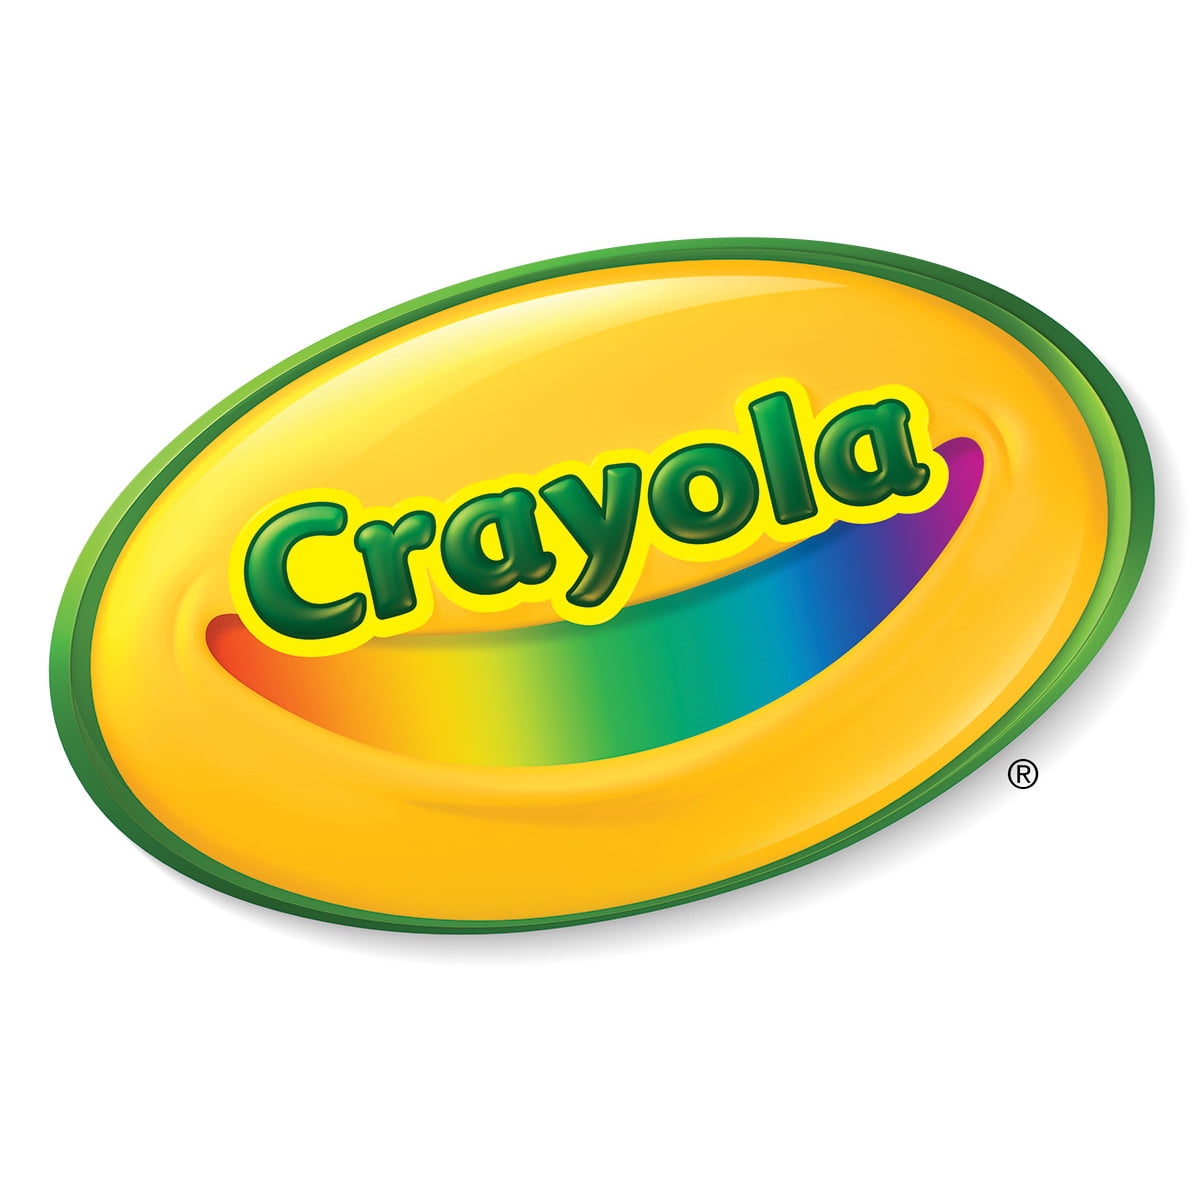 Replying to @crayola 🏙 CRAYOLA SIGNATURE 🖍 BRUSH & DETAIL DUAL-TiP